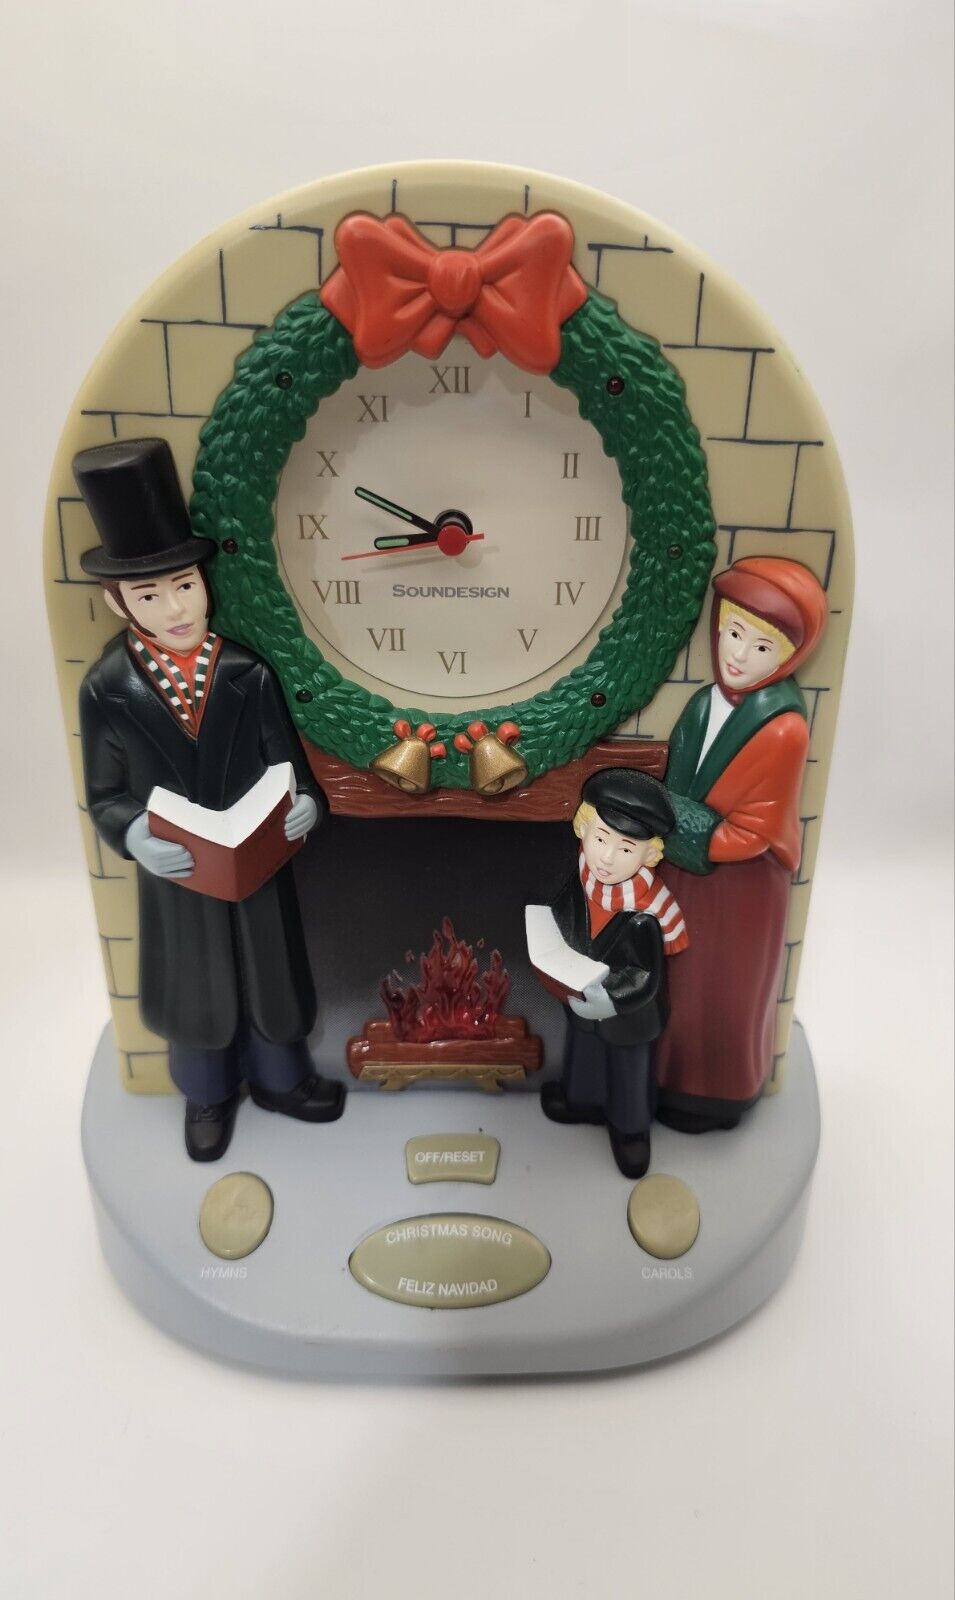 Vintage Musical Christmas Carol Clock Lights Holiday Soundesign, Carolers